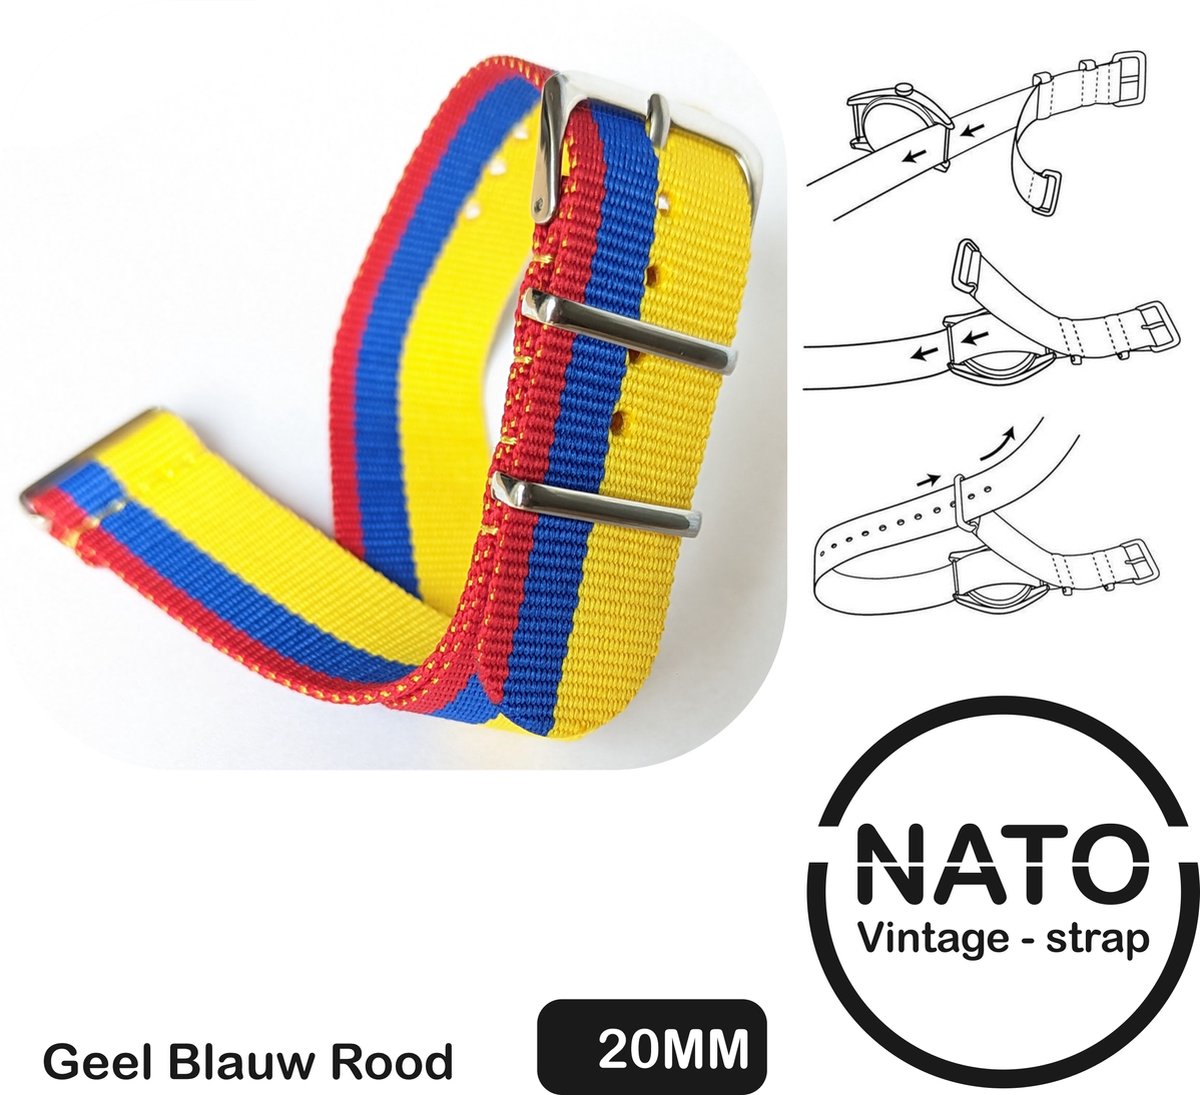 20mm Premium Nato Strap Rood Geel Blauw gestreept - Vintage James Bond - Nato Strap collectie - Mannen - Horlogeband - 20 mm bandbreedte voor oa. Seiko Rolex Omega Casio en Citizen